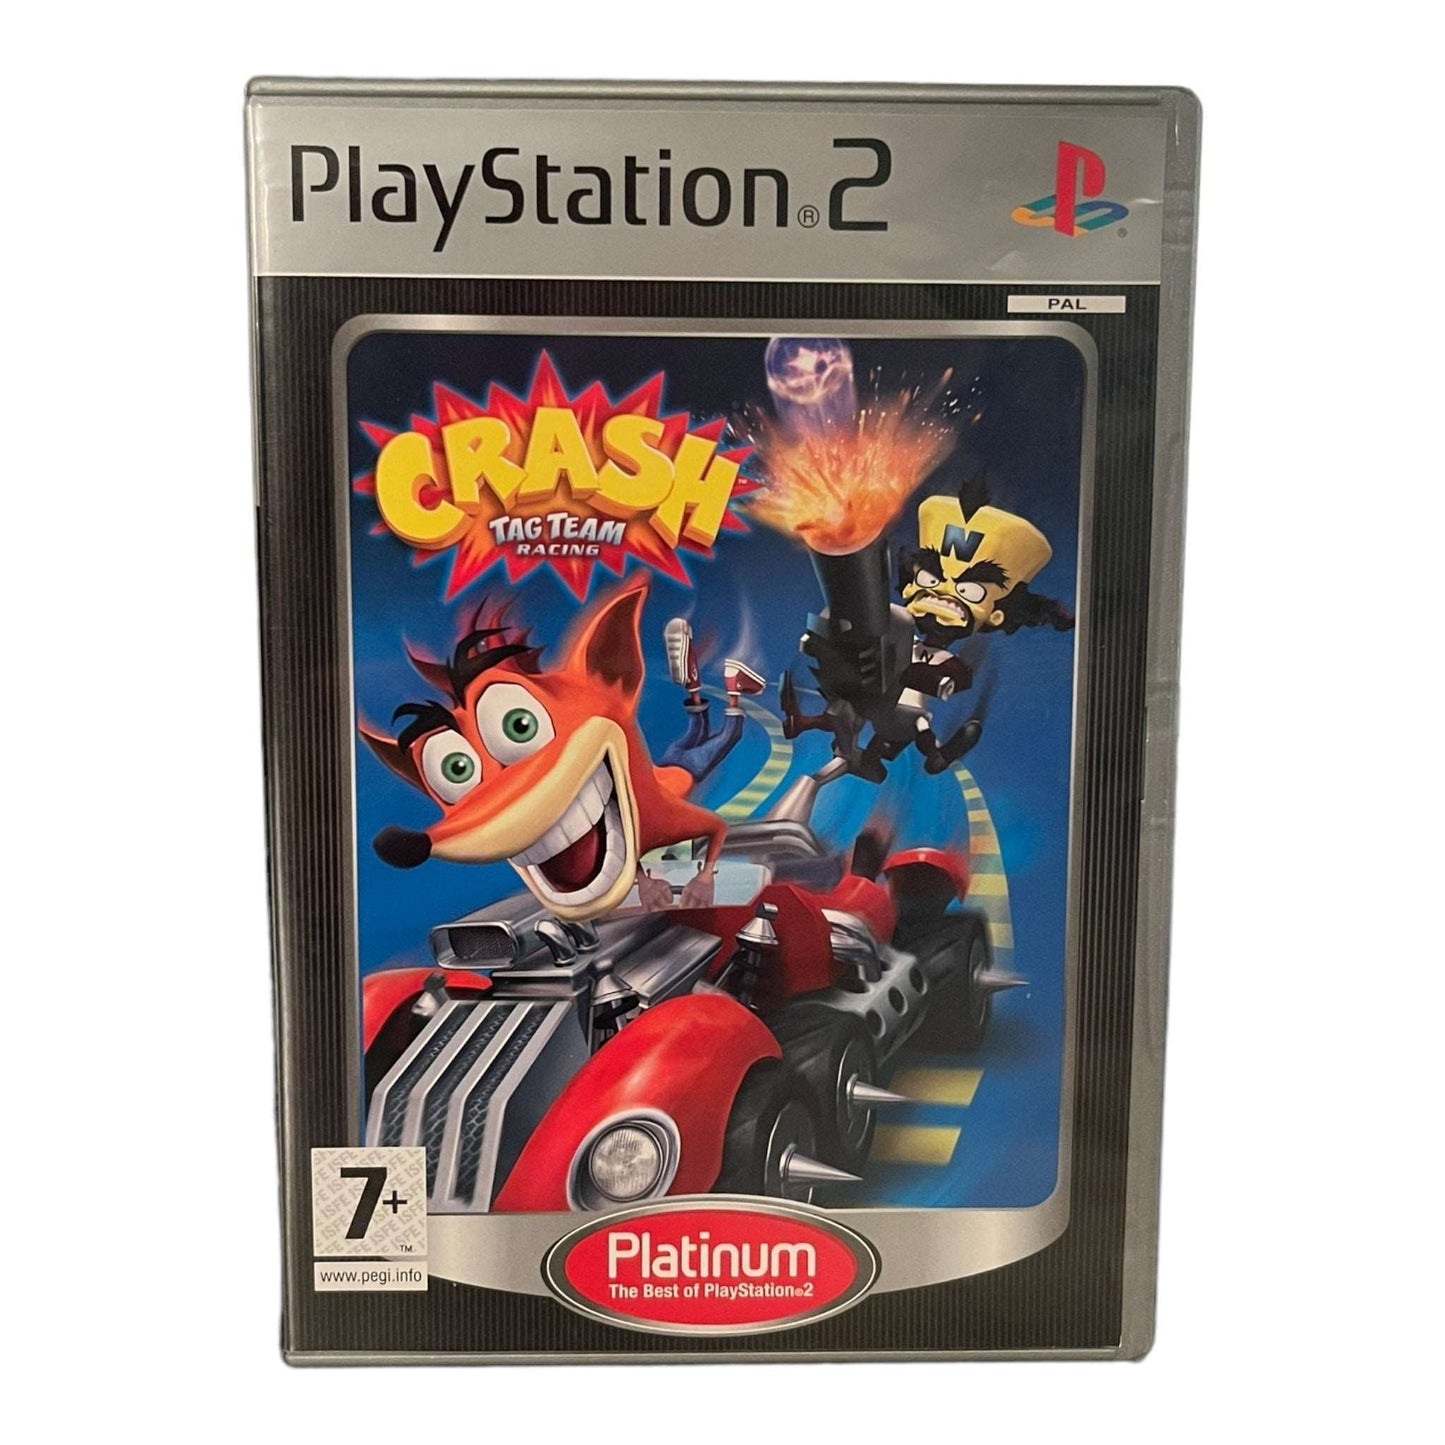 Crash Tag Team Racing - PS2 - Platinum